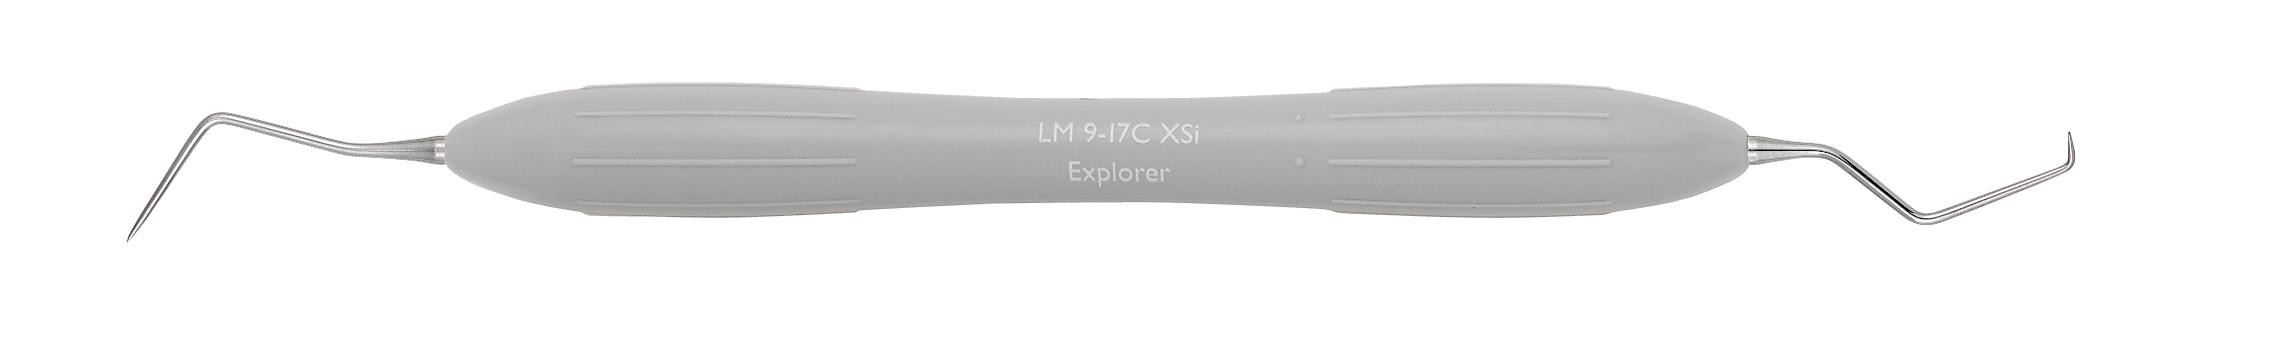 Explorer, centered 9-17CXSI